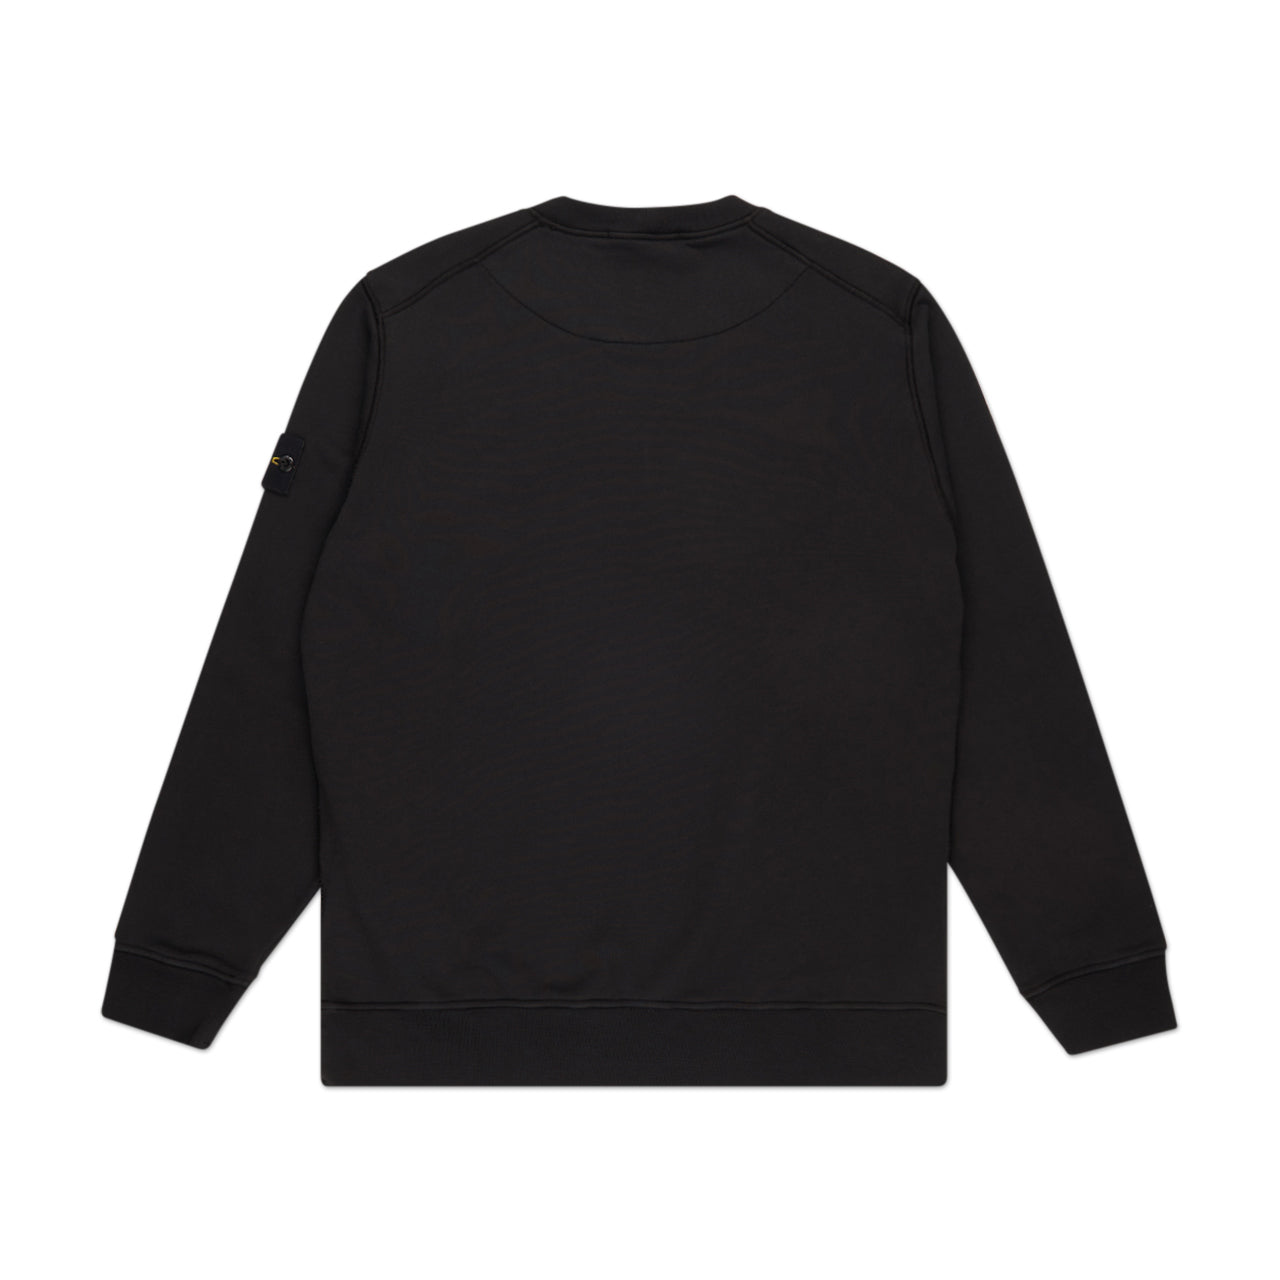 stone island stone island sweatshirt (black)